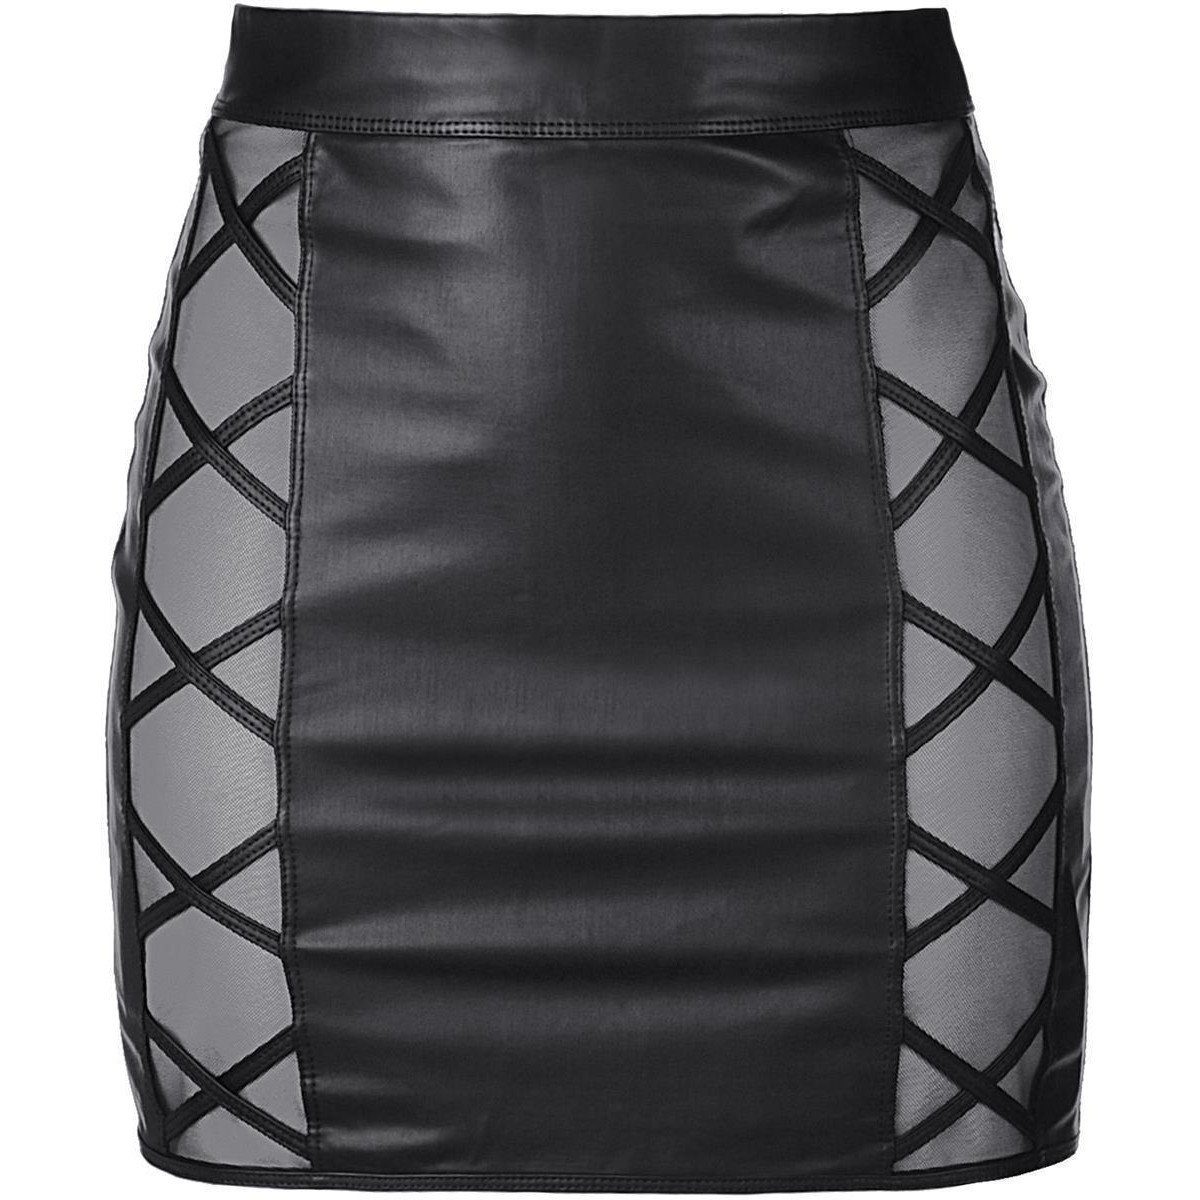 Axami Midirock V-9329 skirt black (L,M,S,XL) 